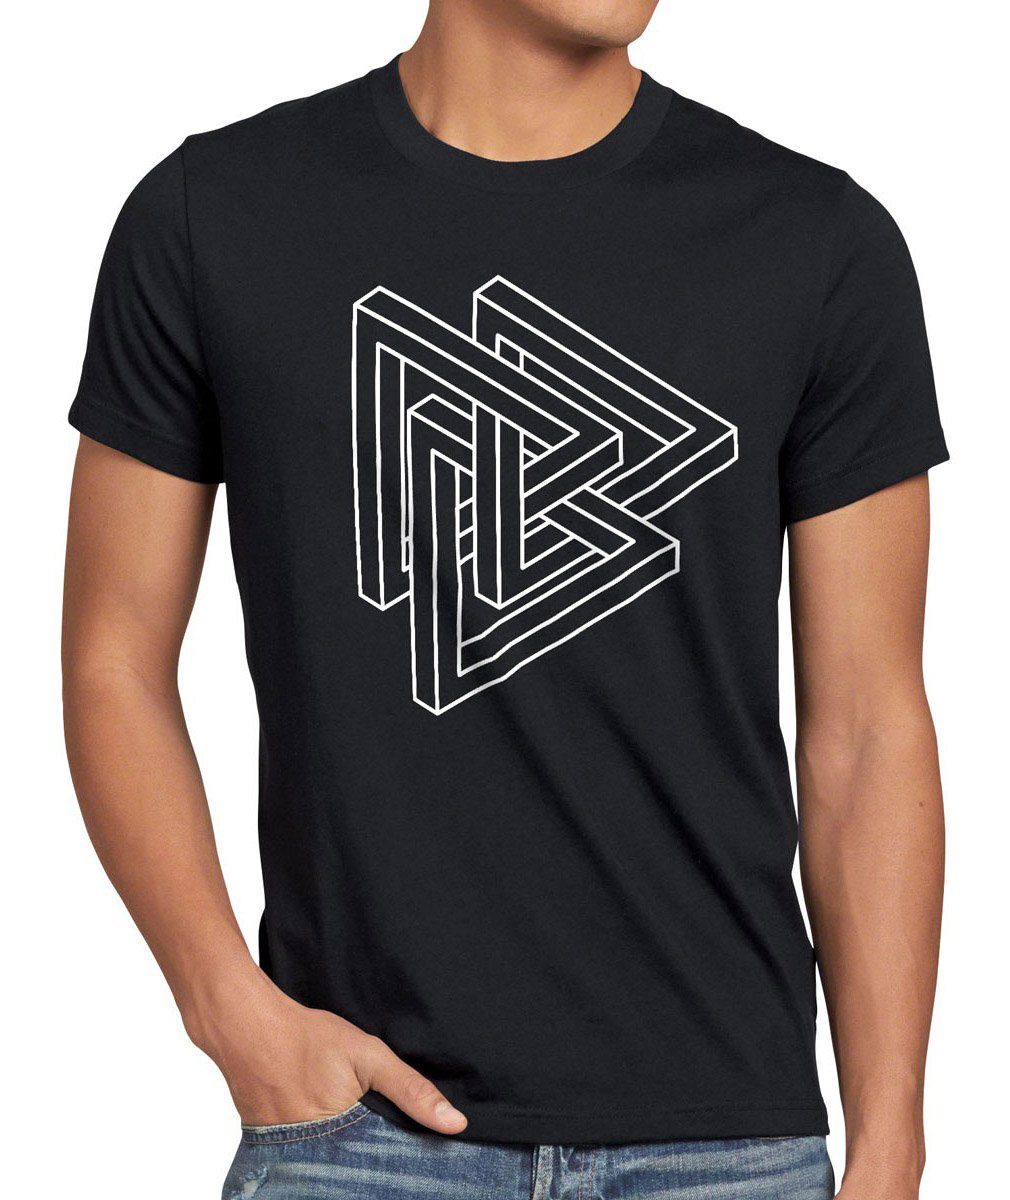 style3 Print-Shirt Herren T-Shirt Penrose Big Bang Sheldon Escher Cooper Dreieck Würfel Theory geo schwarz